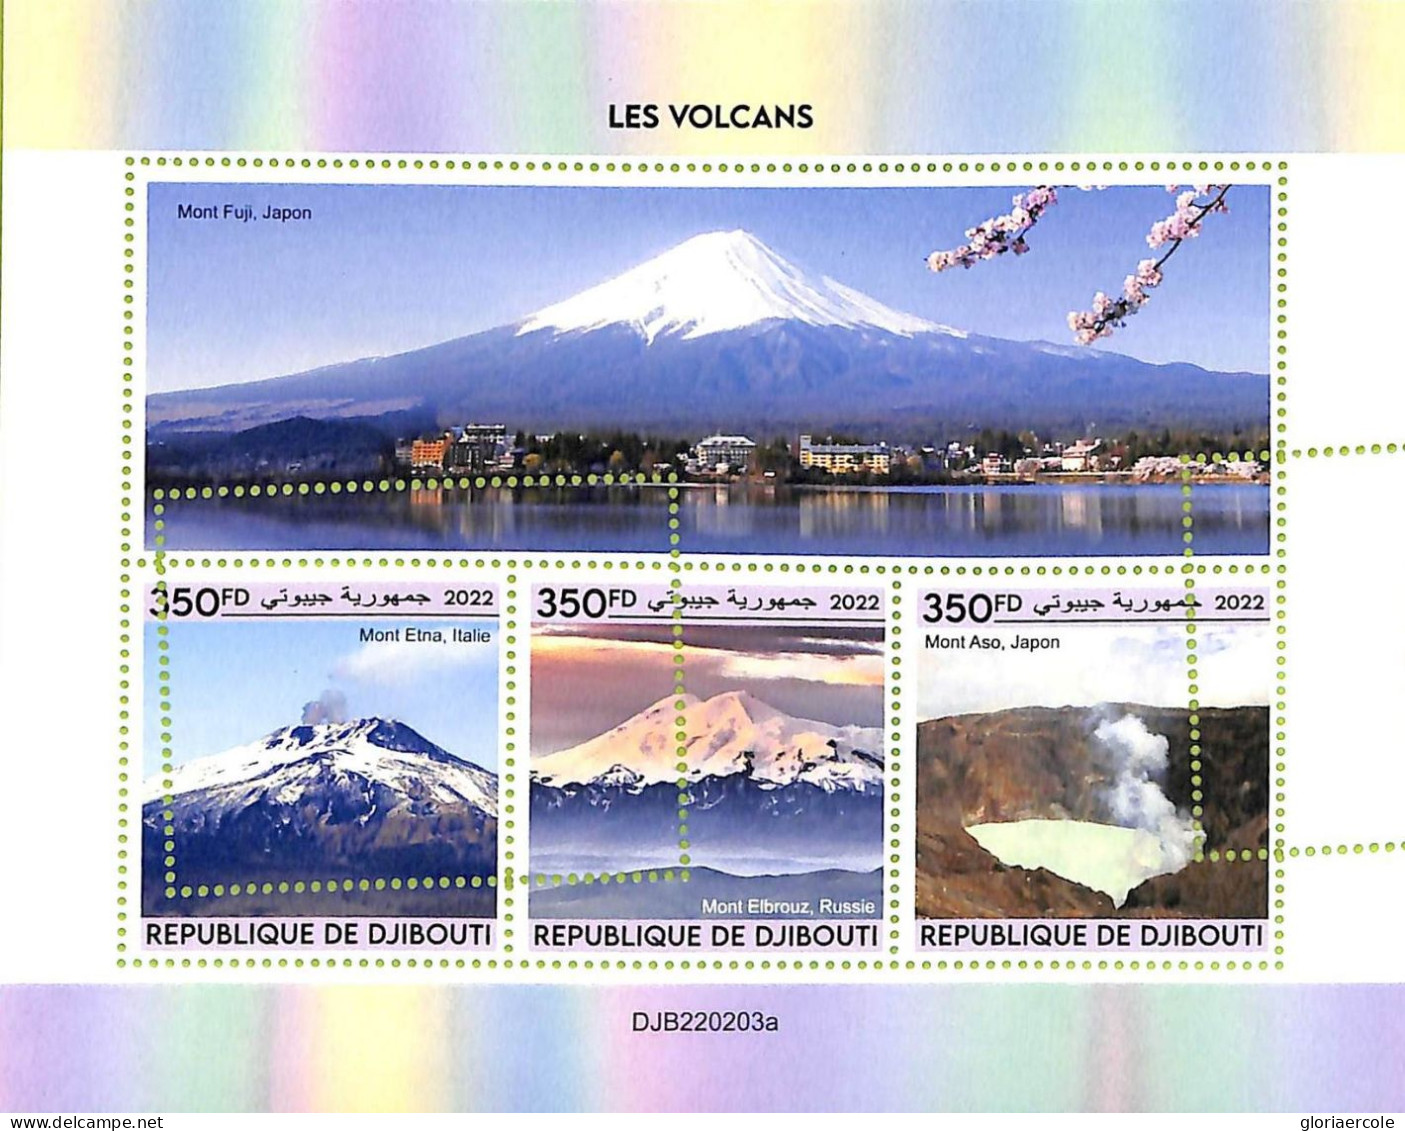 A7514 - DJIBOUTI - ERROR MISPERF Stamp Sheet - 2022 - Volcanoes - Volcans